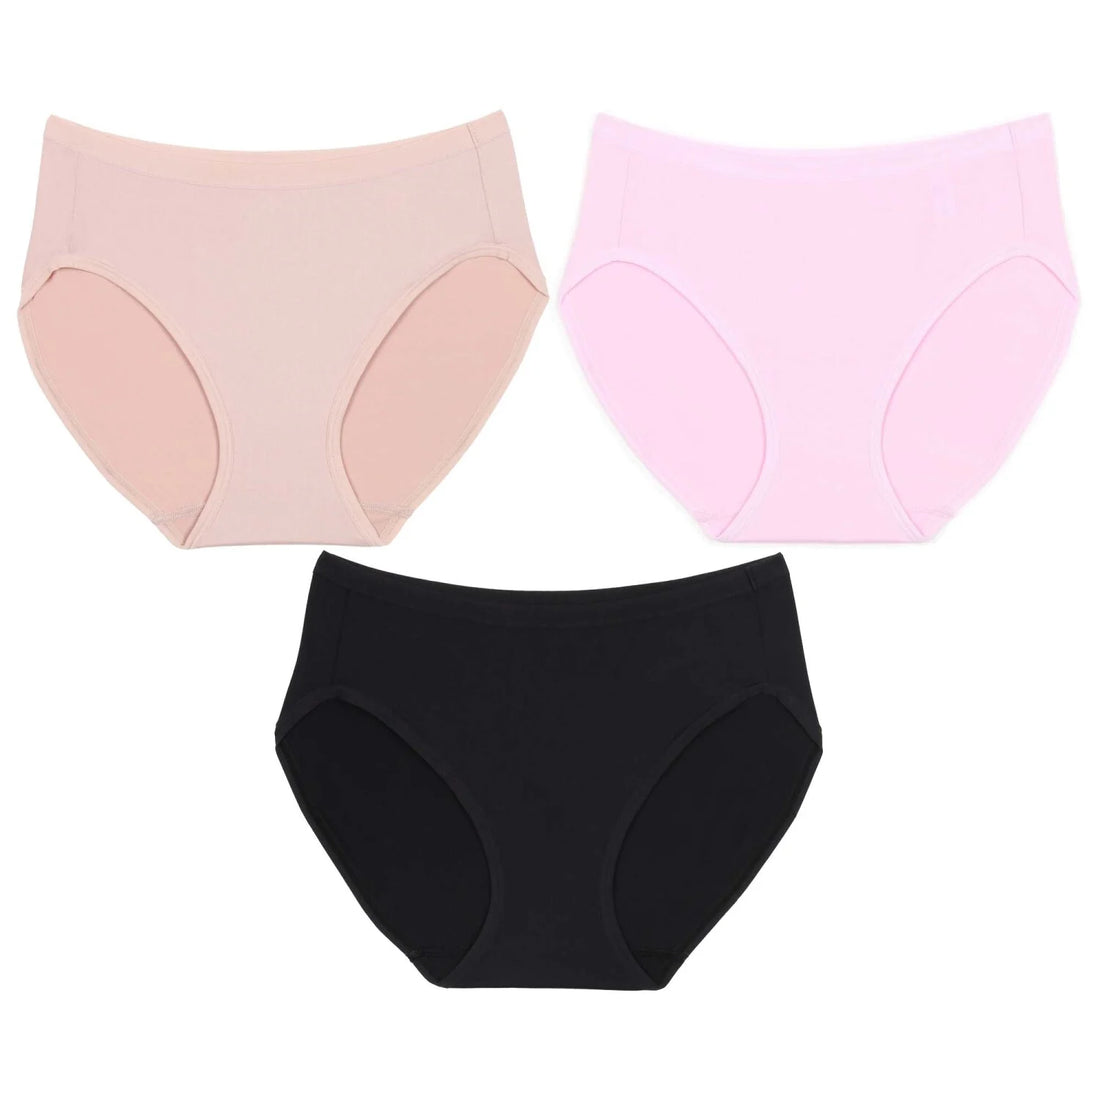 Wacoal Panty pack, comfortable underwear Bikini pattern set 3 pieces, model WU1T34, assorted colors (beige-black-pink)